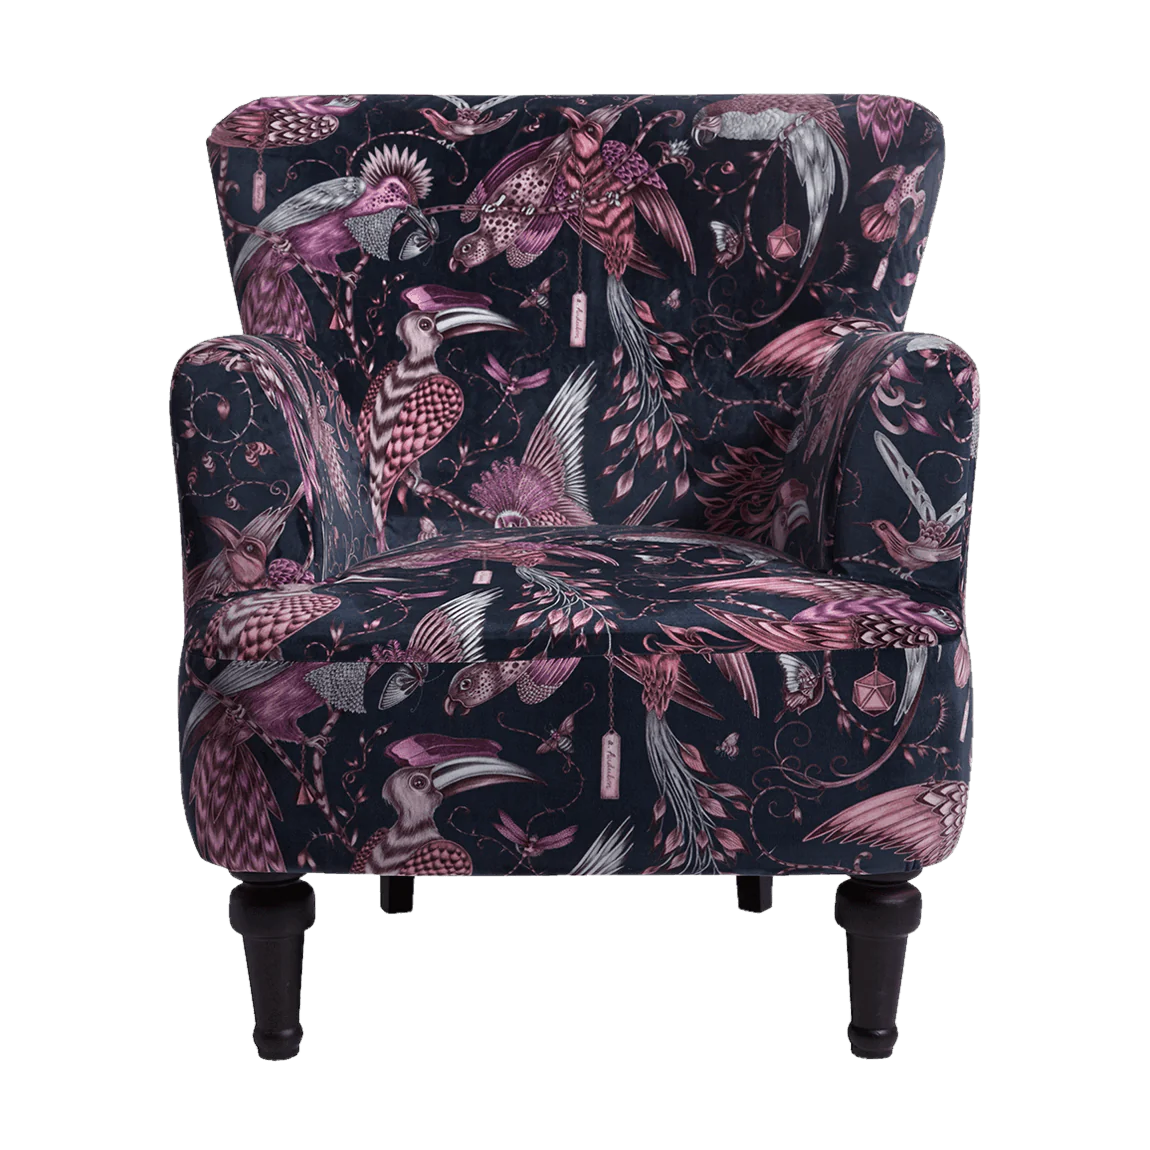 Audubon Pink Dalston Chair